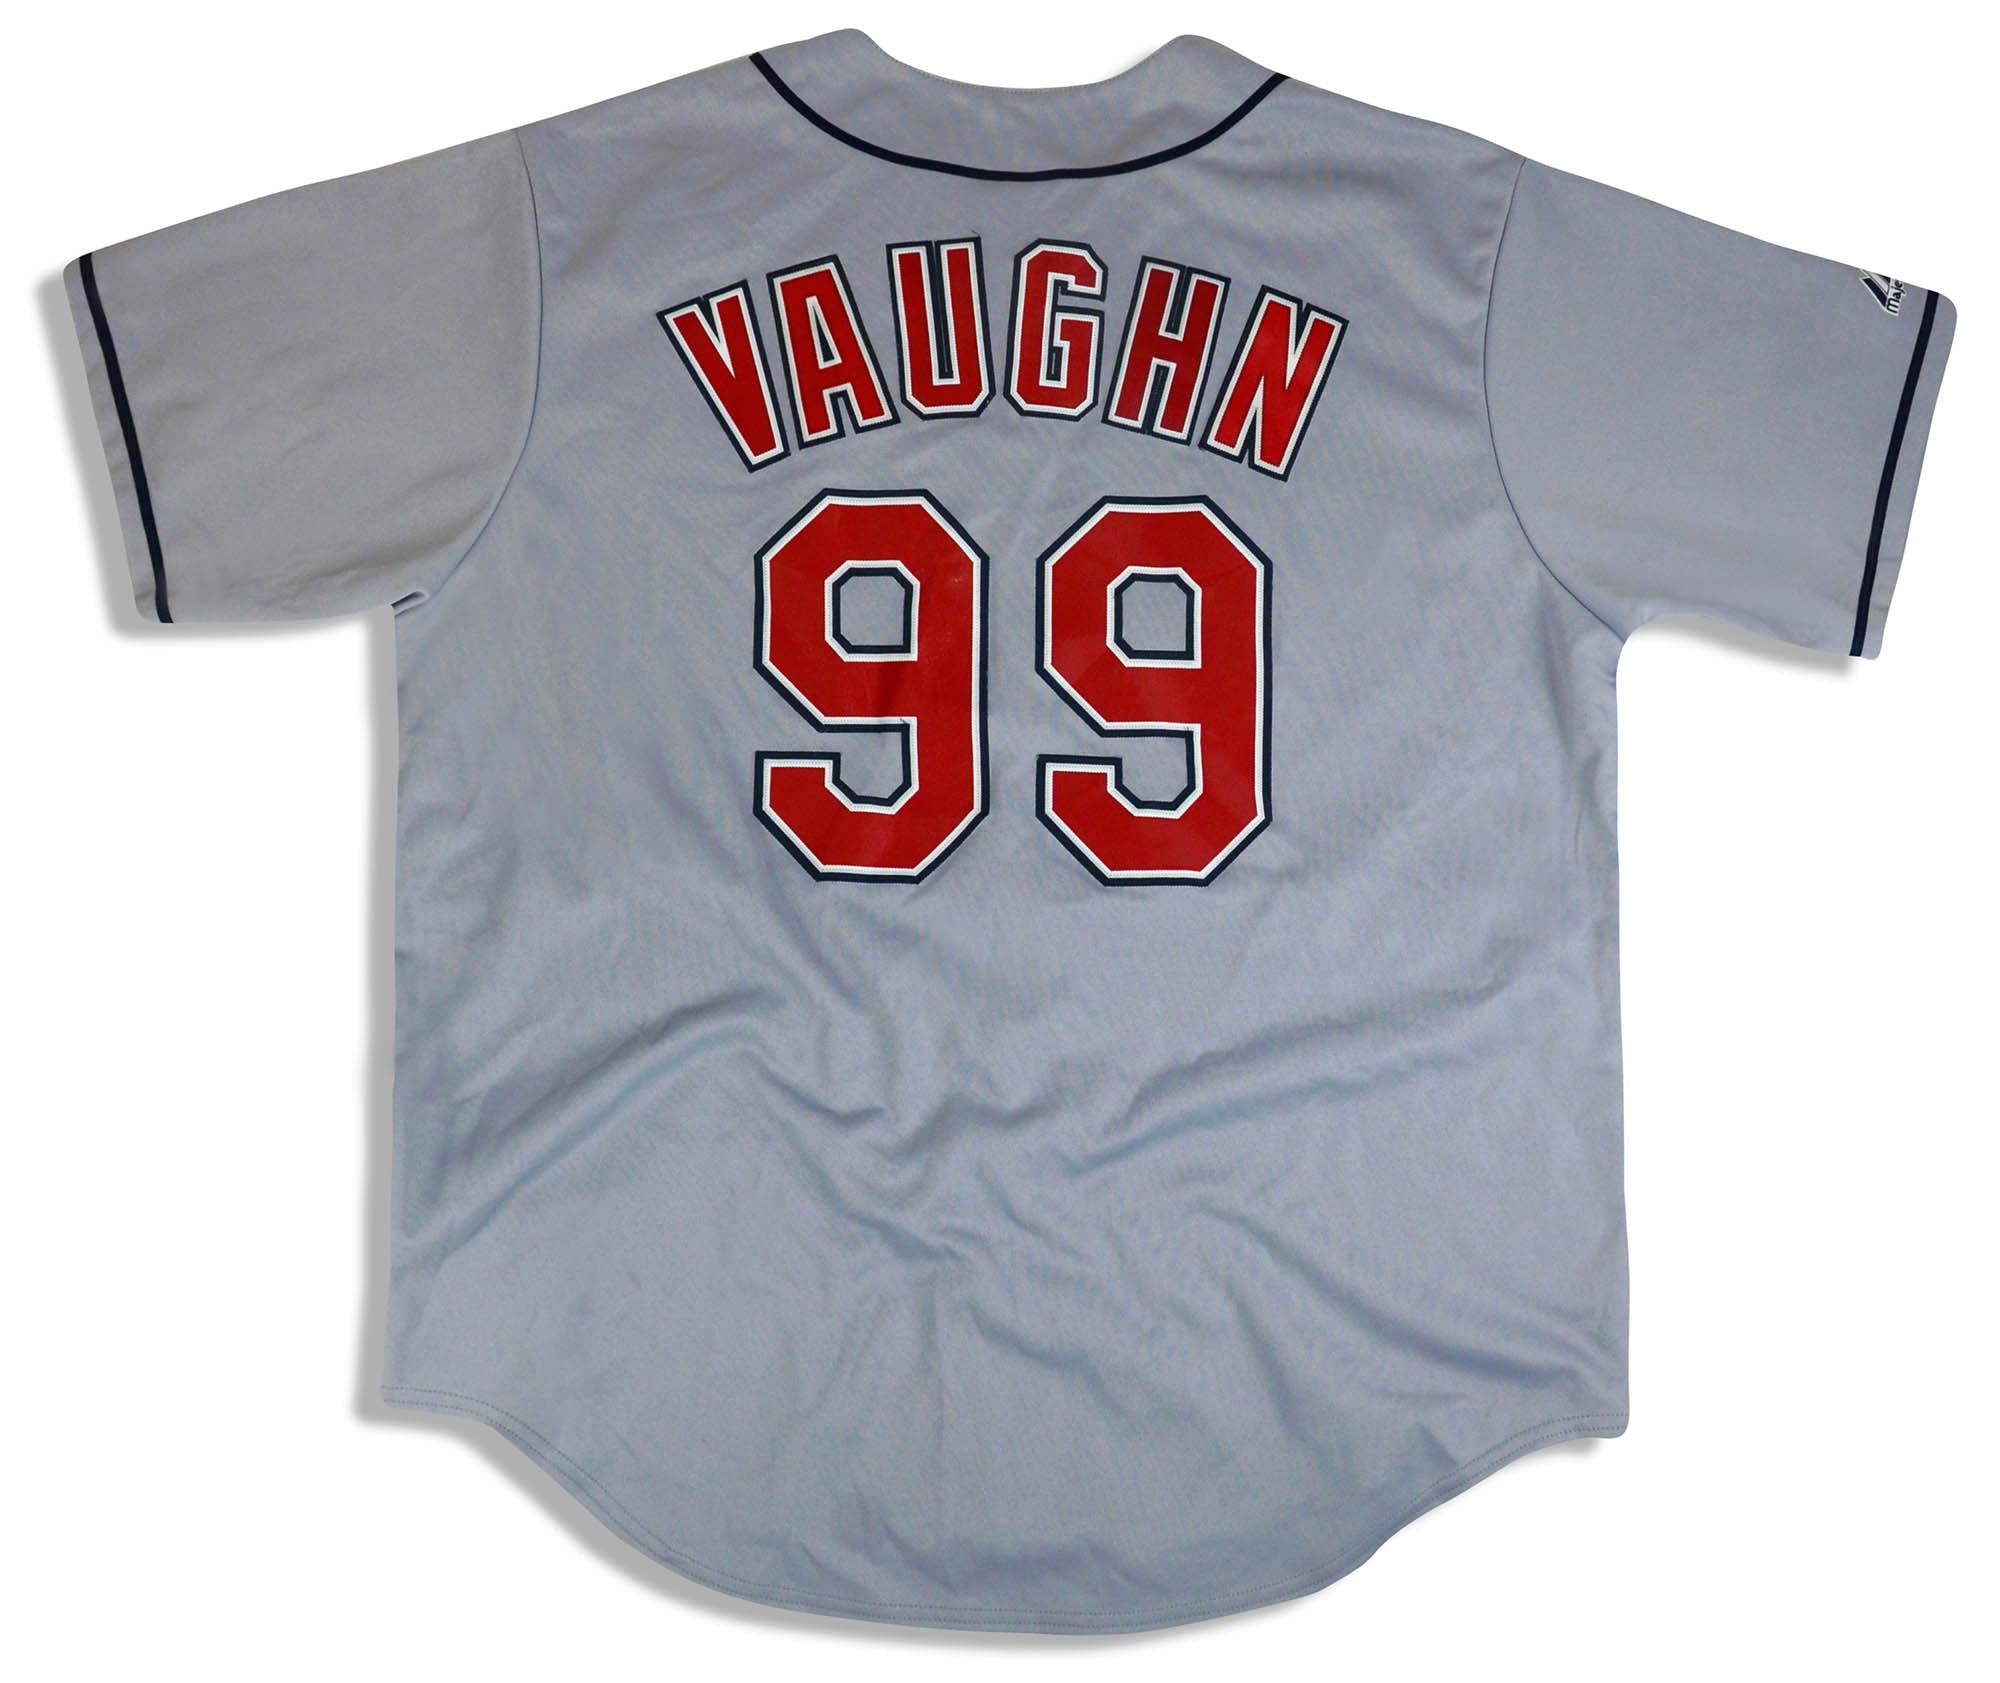 Cleveland Indians Ricky Vaughn jersey